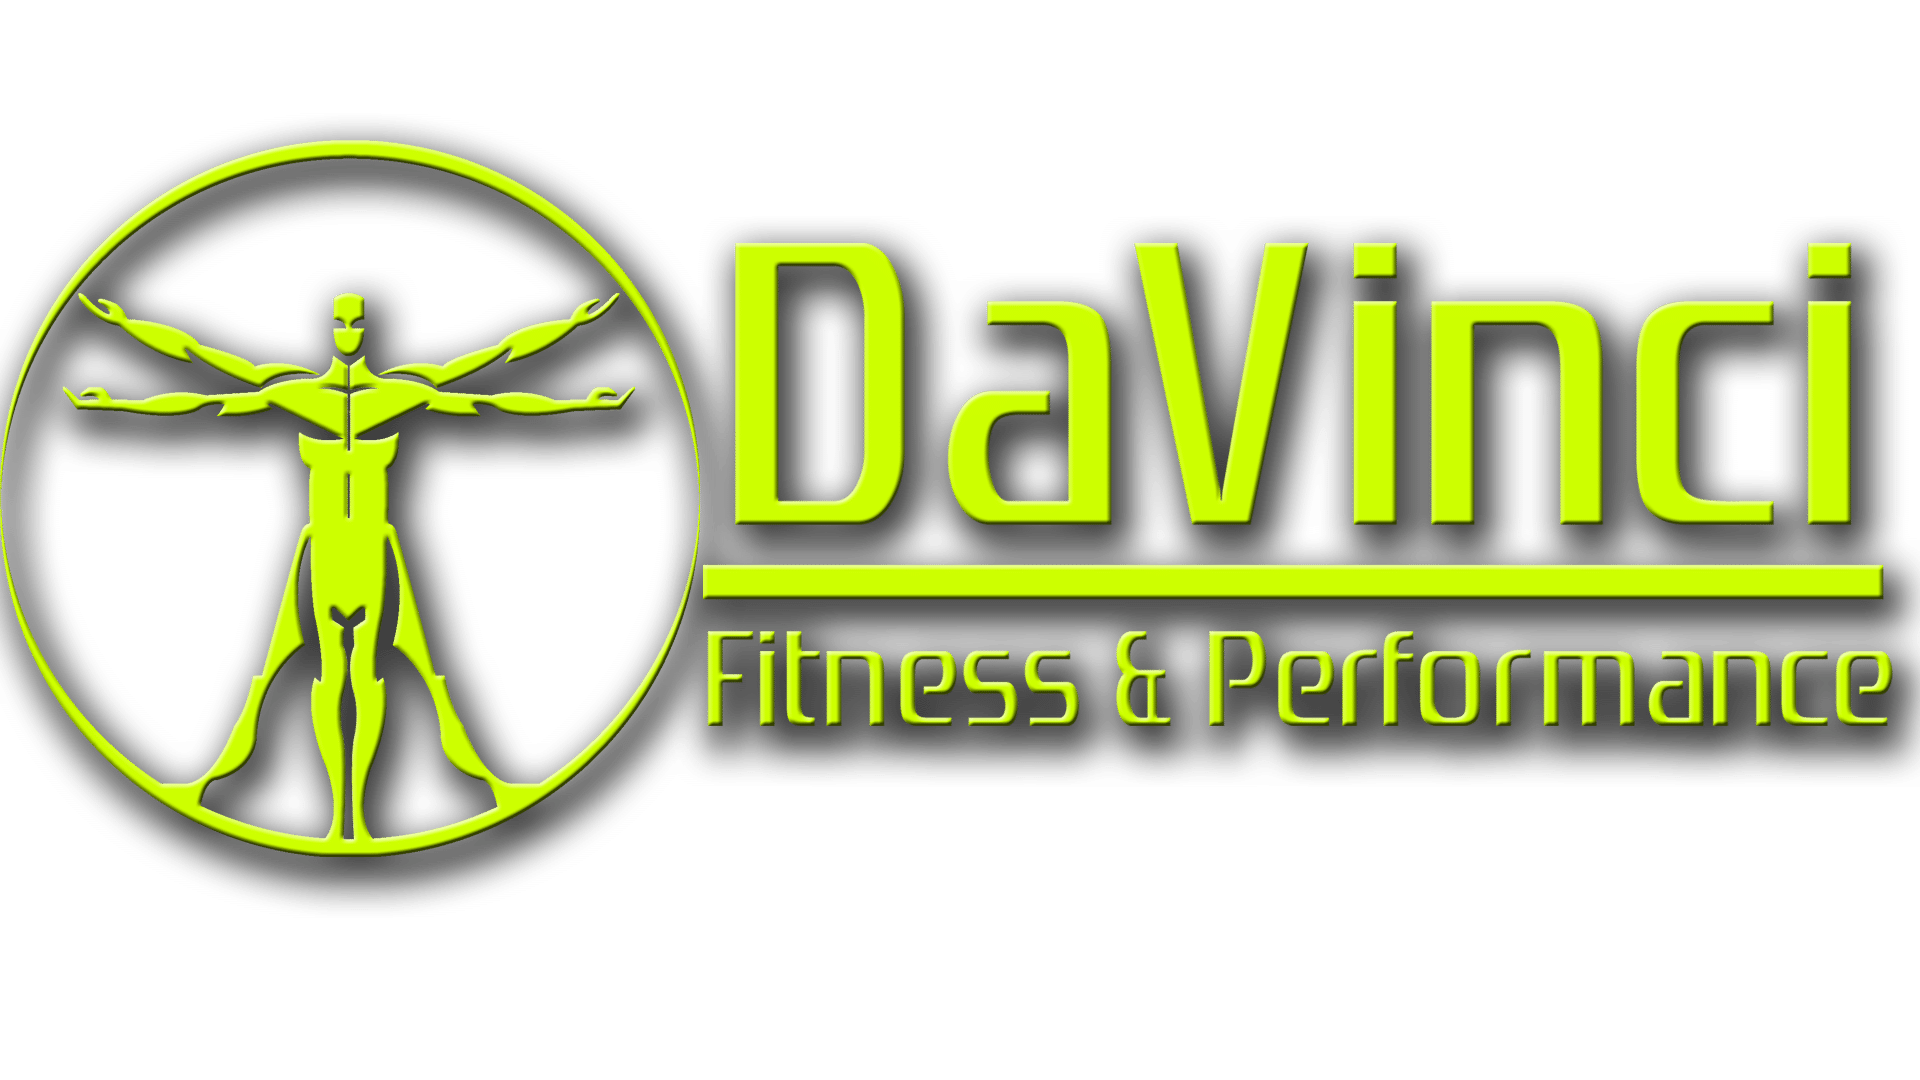 DaVinci Fitness and Performance